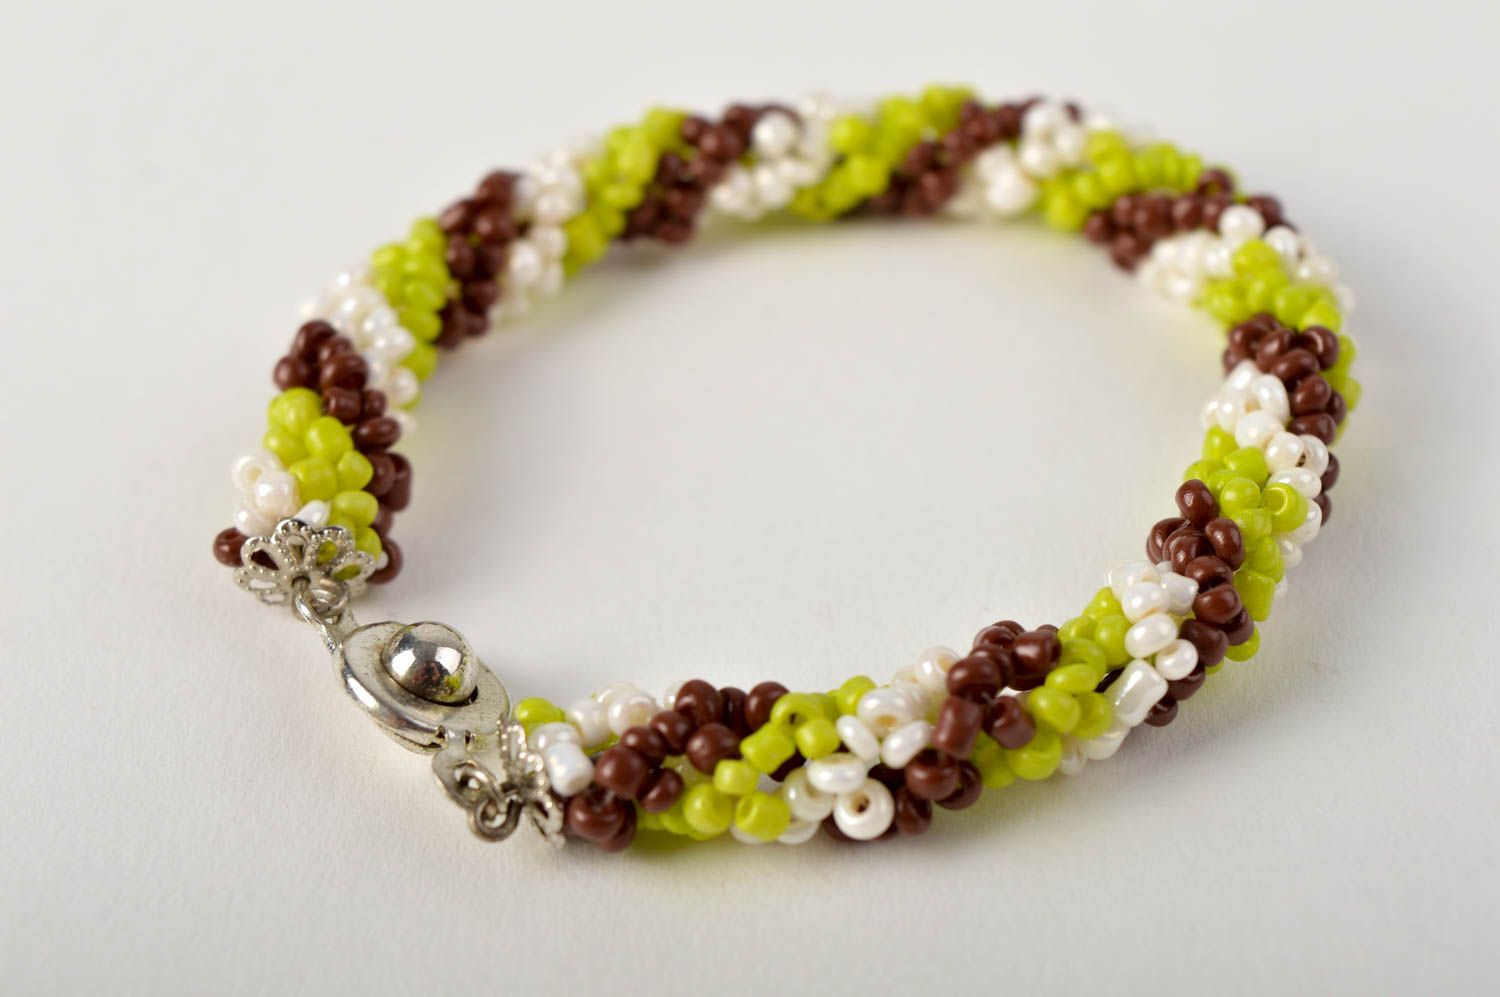 Stylish handmade beaded cord bracelet woven bead bracelet designs gifts for her photo 3